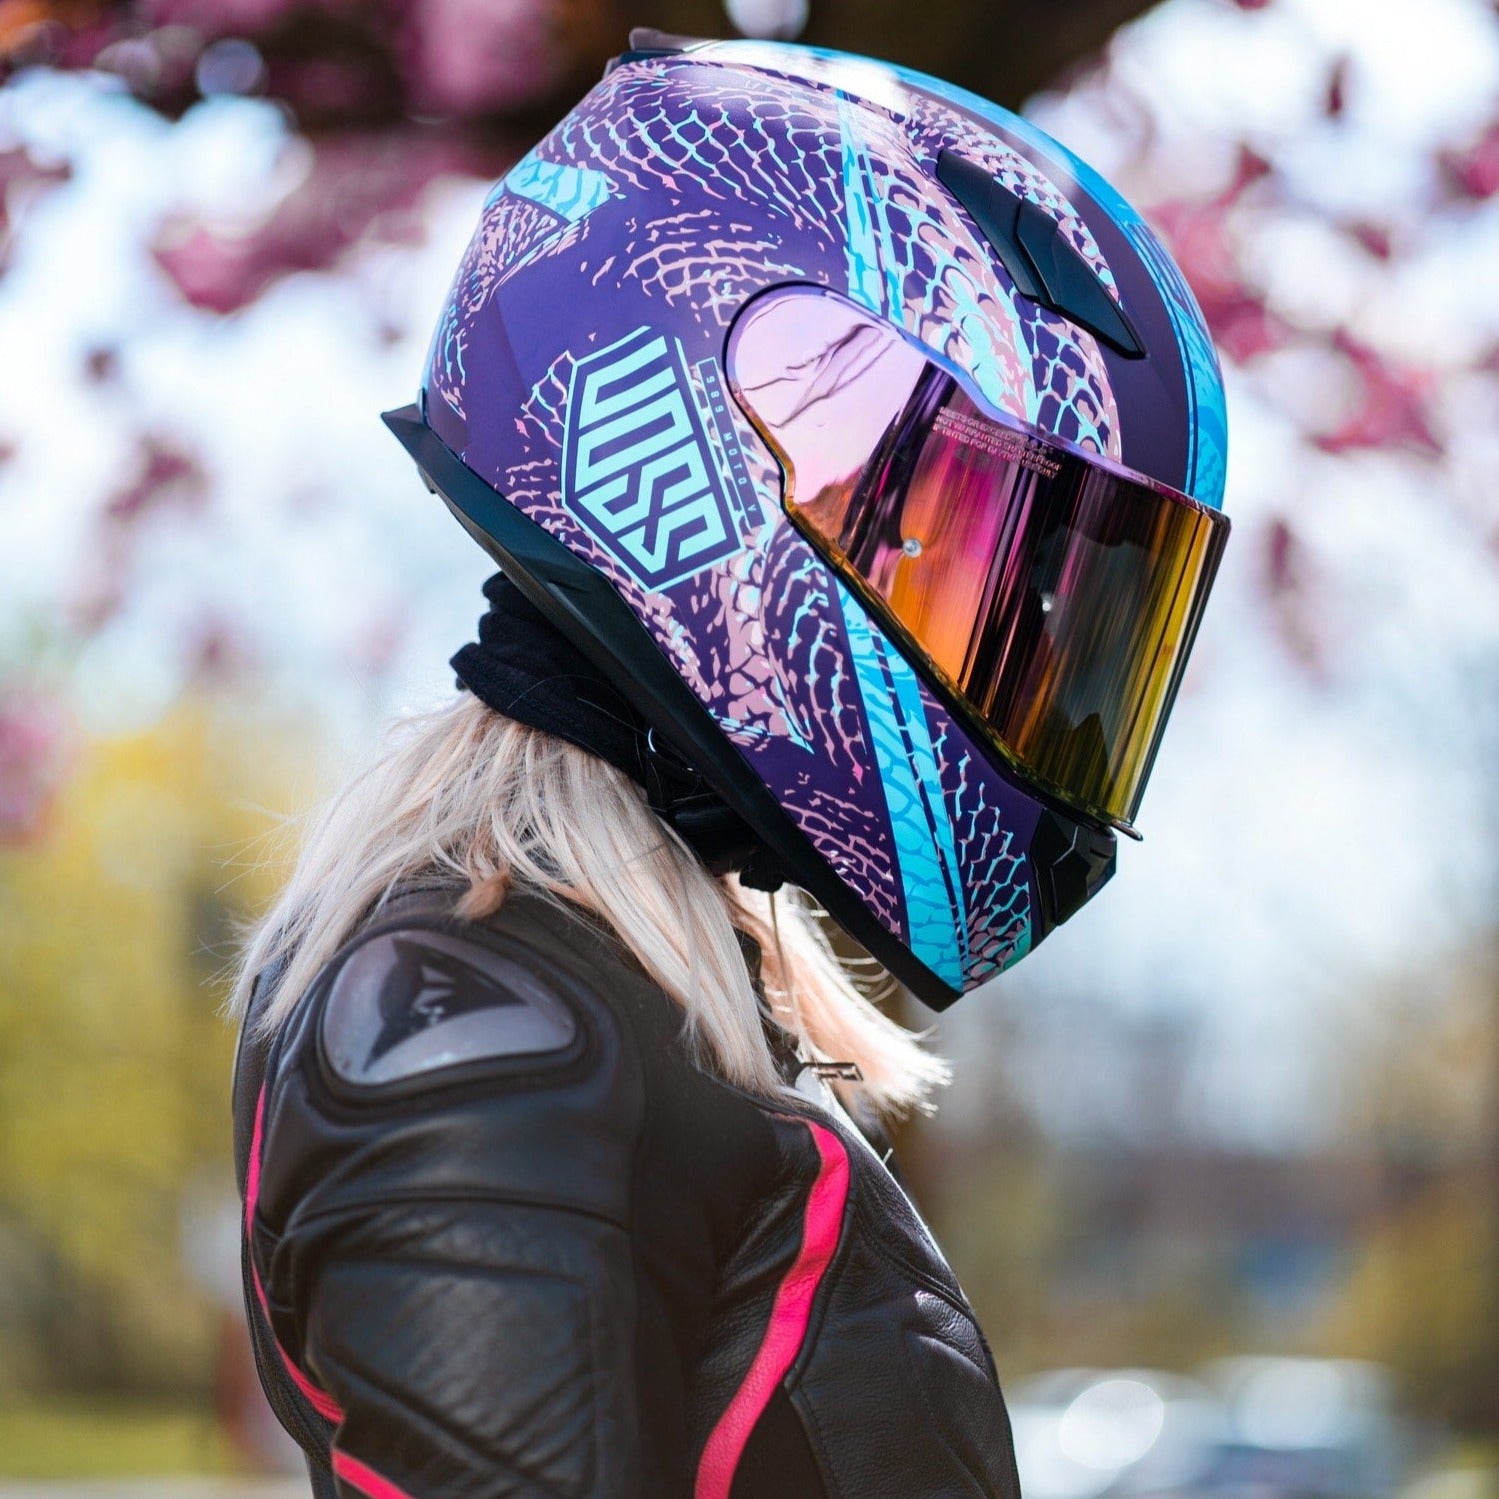 Voss 988 Moto-1 Purple Haze Serpienti Helmet